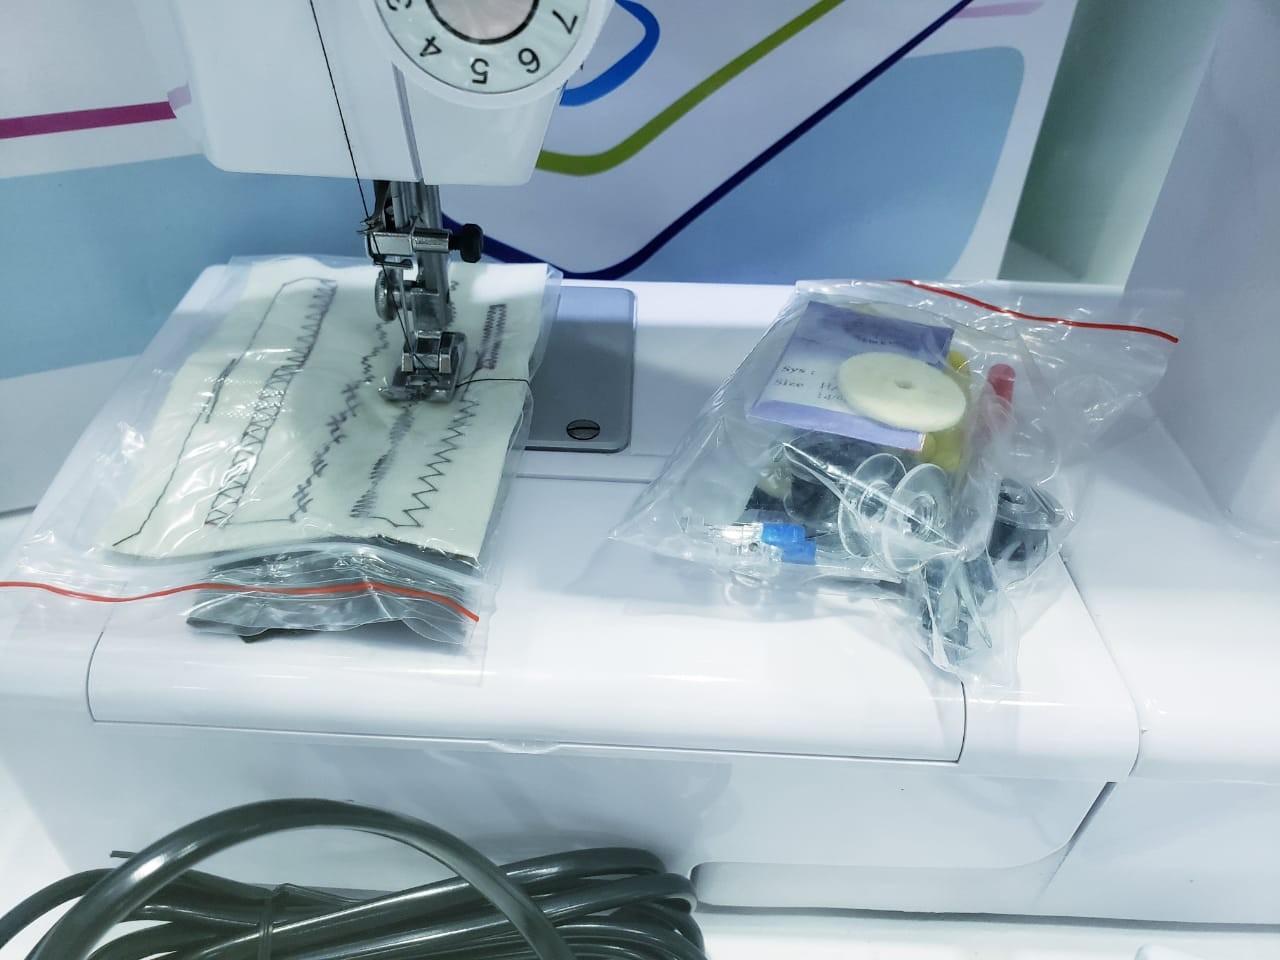 electrodomesticos - Maquina de coser Electrica multifuncional profesional JUKKY FH653 8